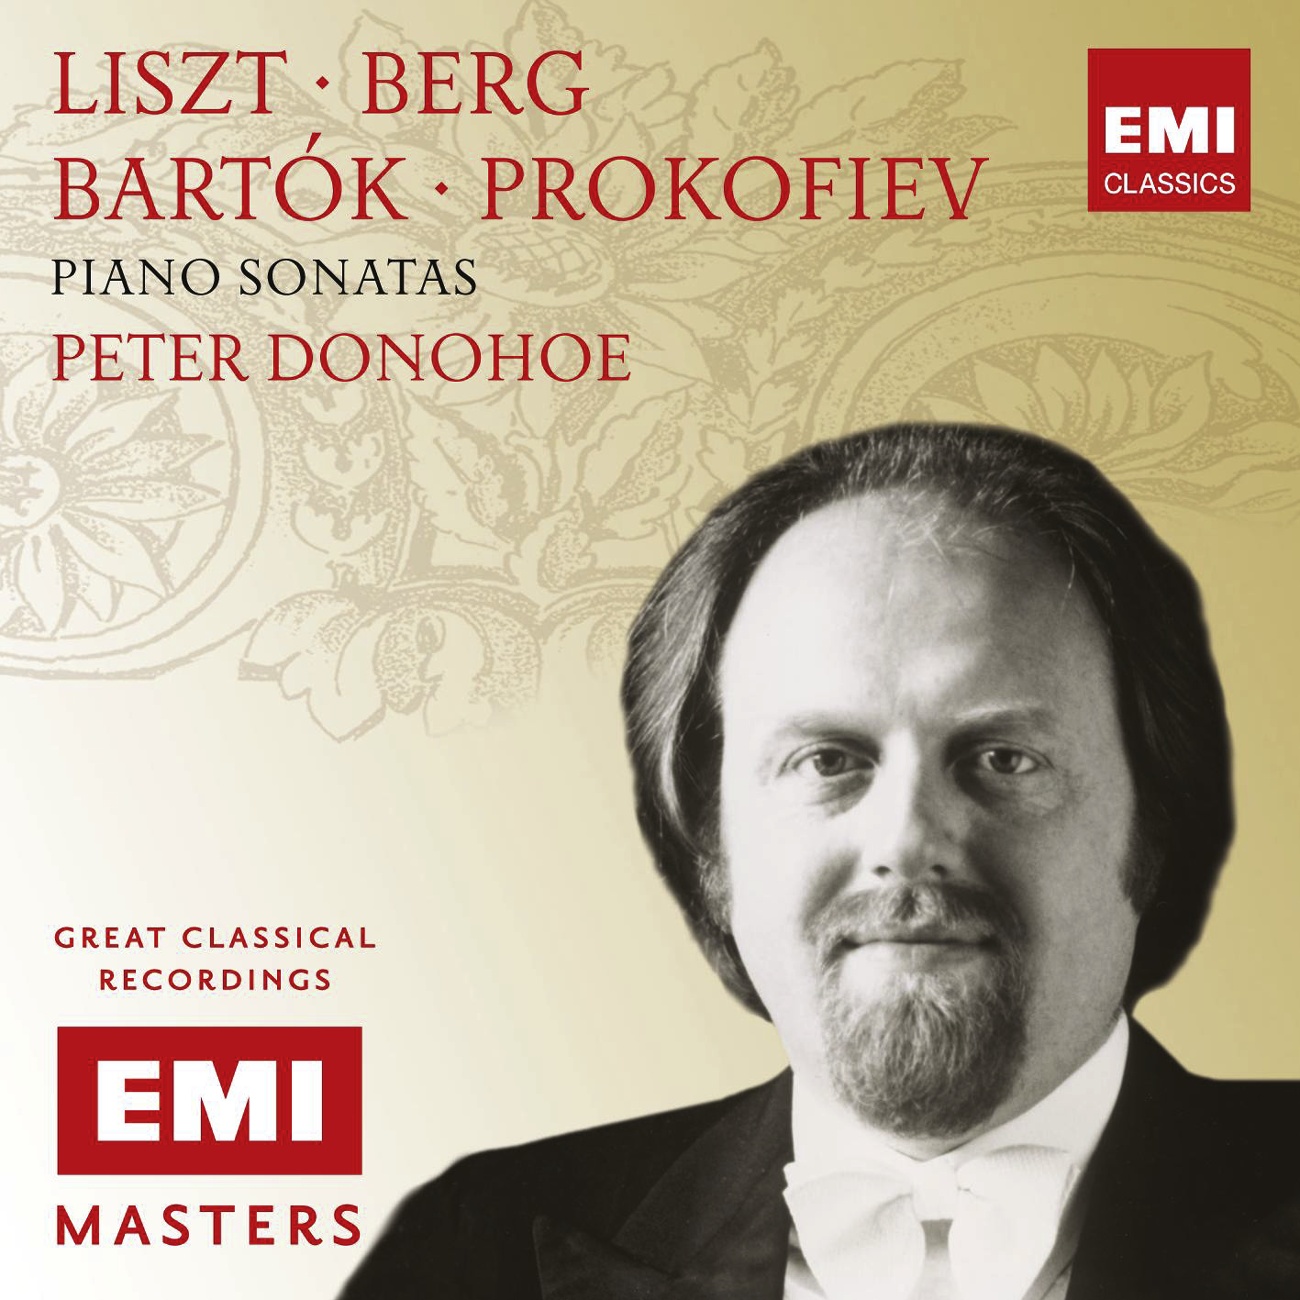 Liszt, Berg, Barto k  Prokofiev: Piano Sonatas